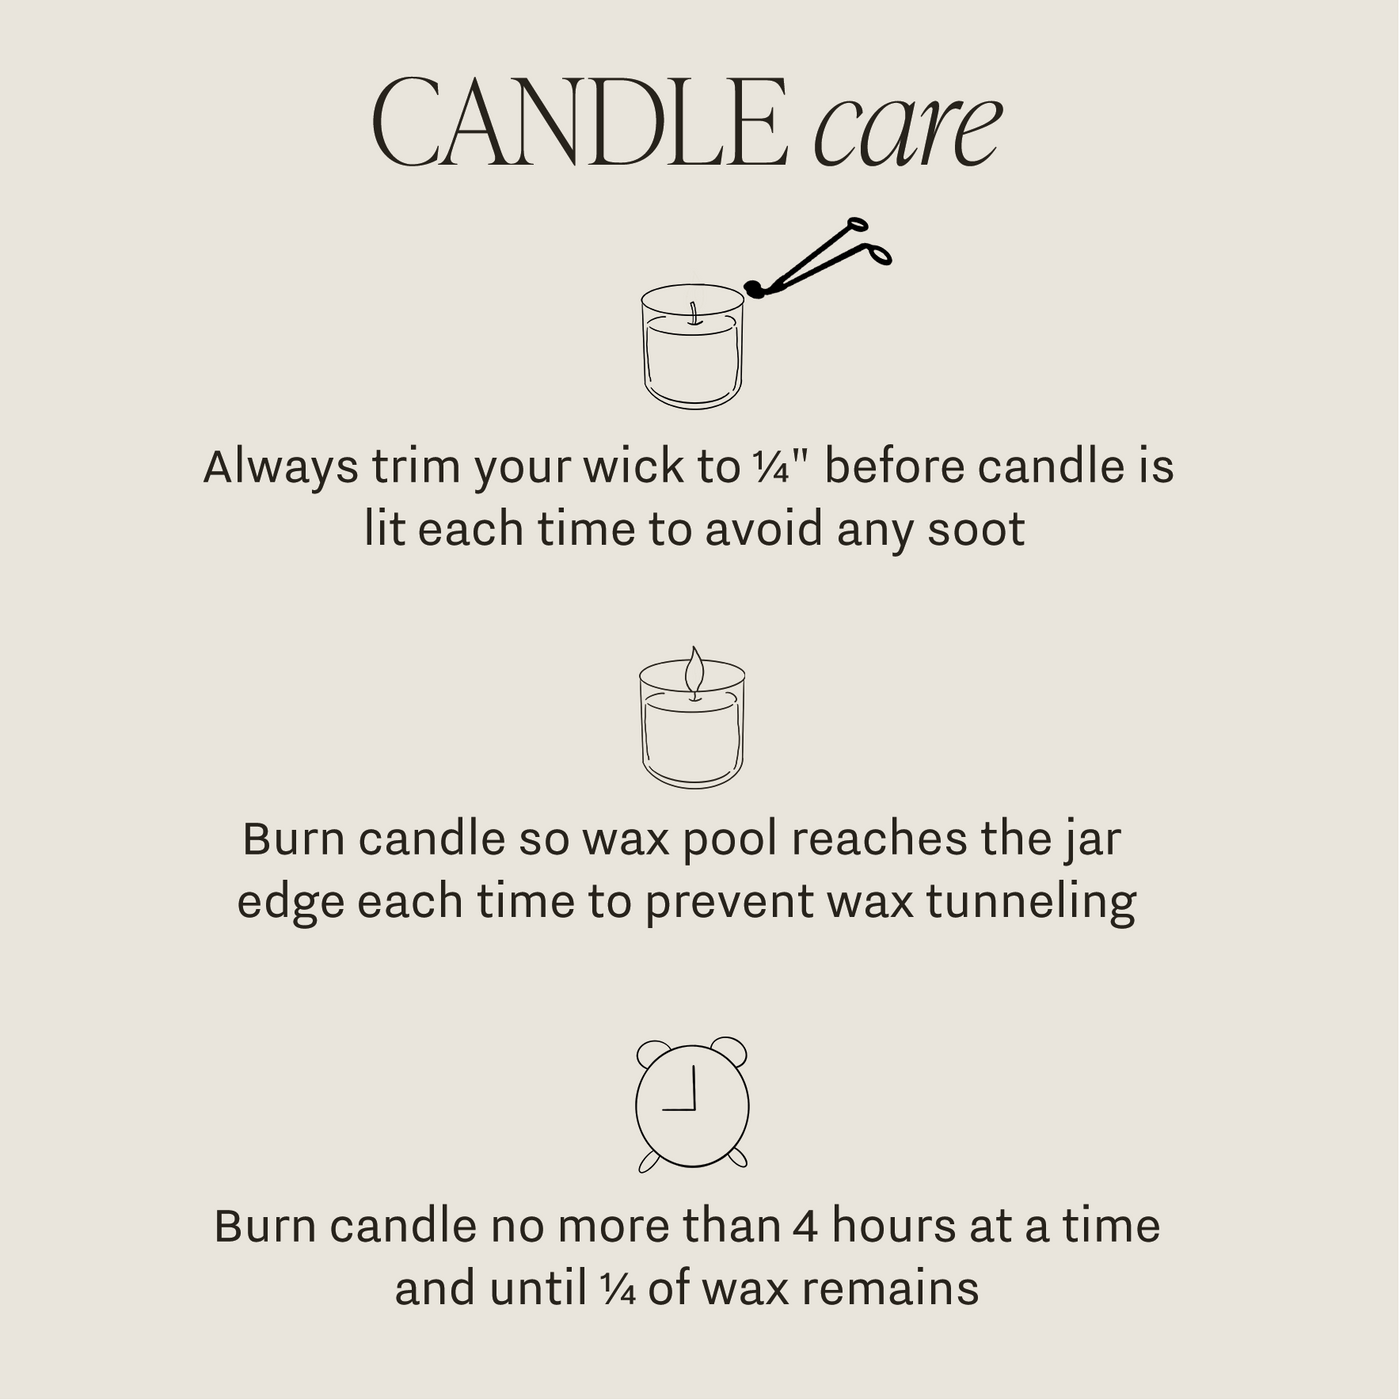 Warm and Cozy Soy Candle - Cream Stoneware Jar - 12 oz